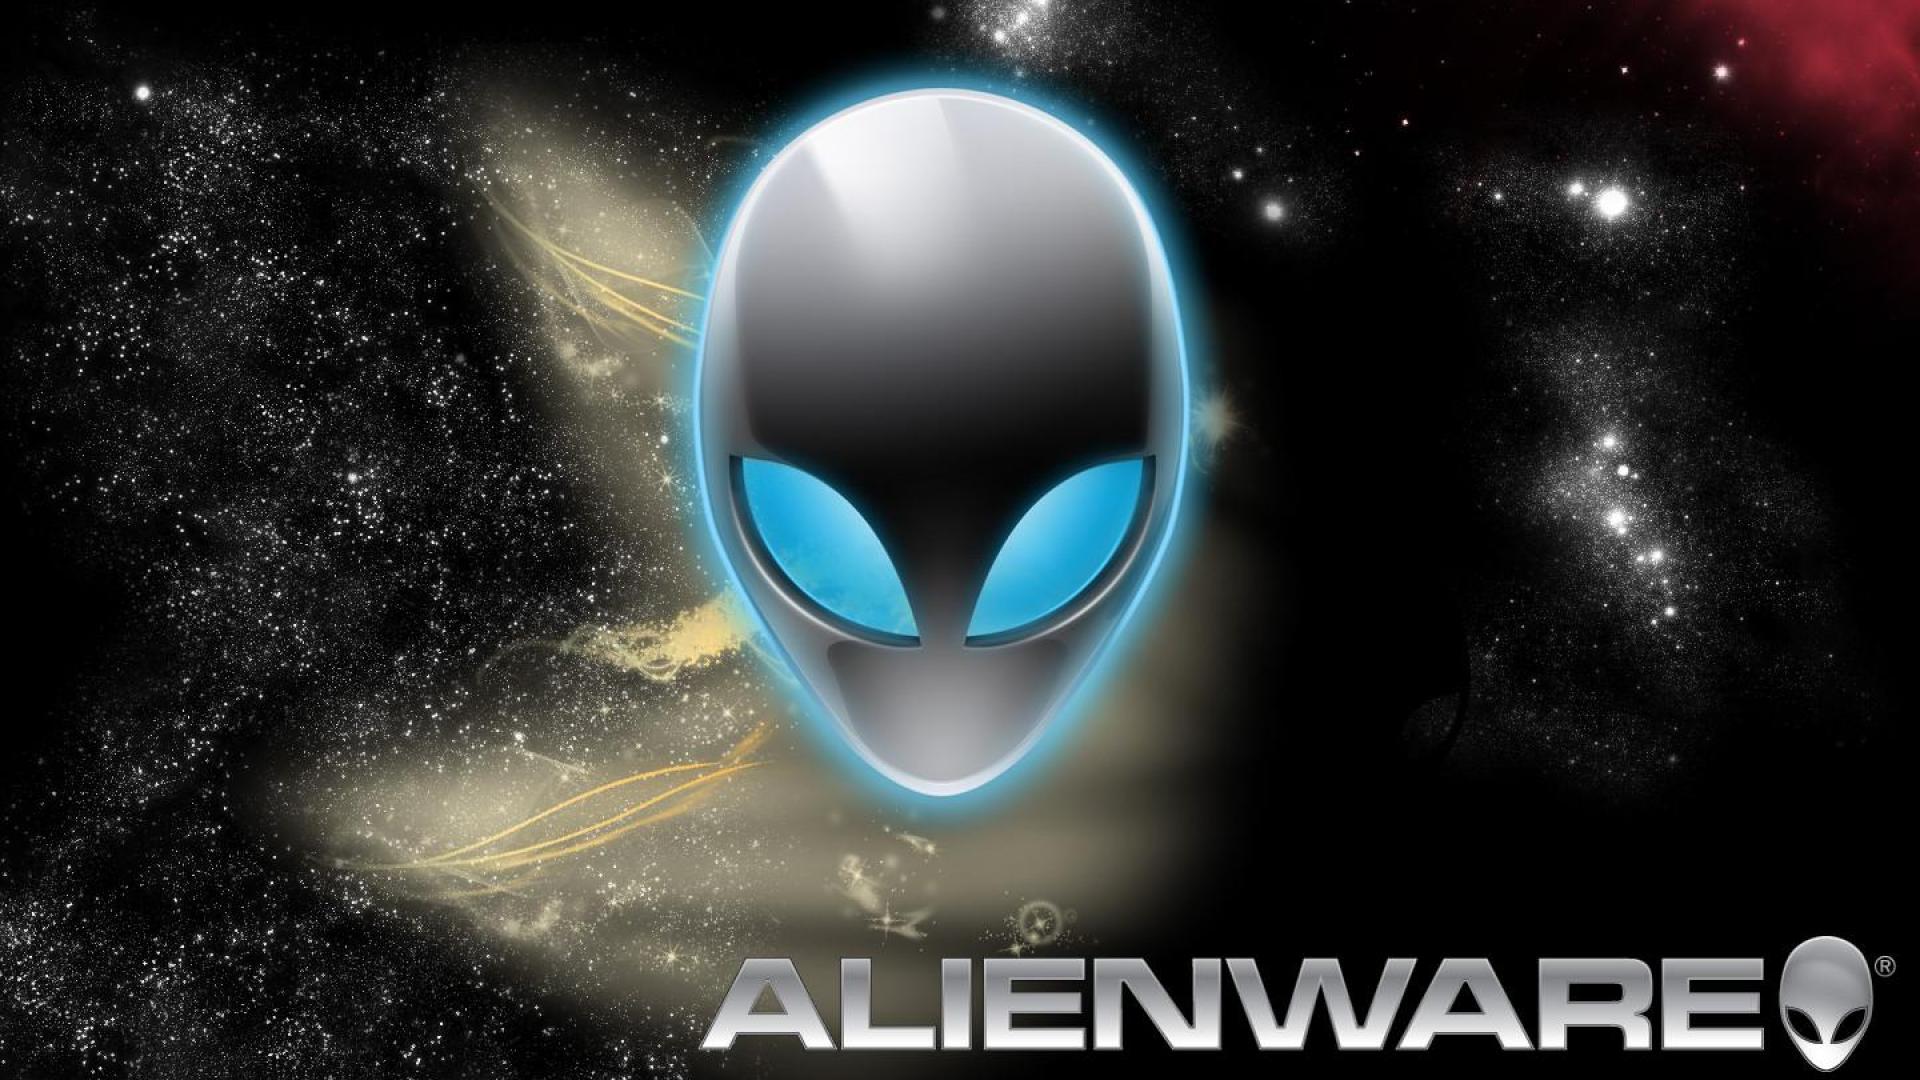 ALIENWARE SPACE WALLPAPER - (#26558) - HD Wallpapers ...